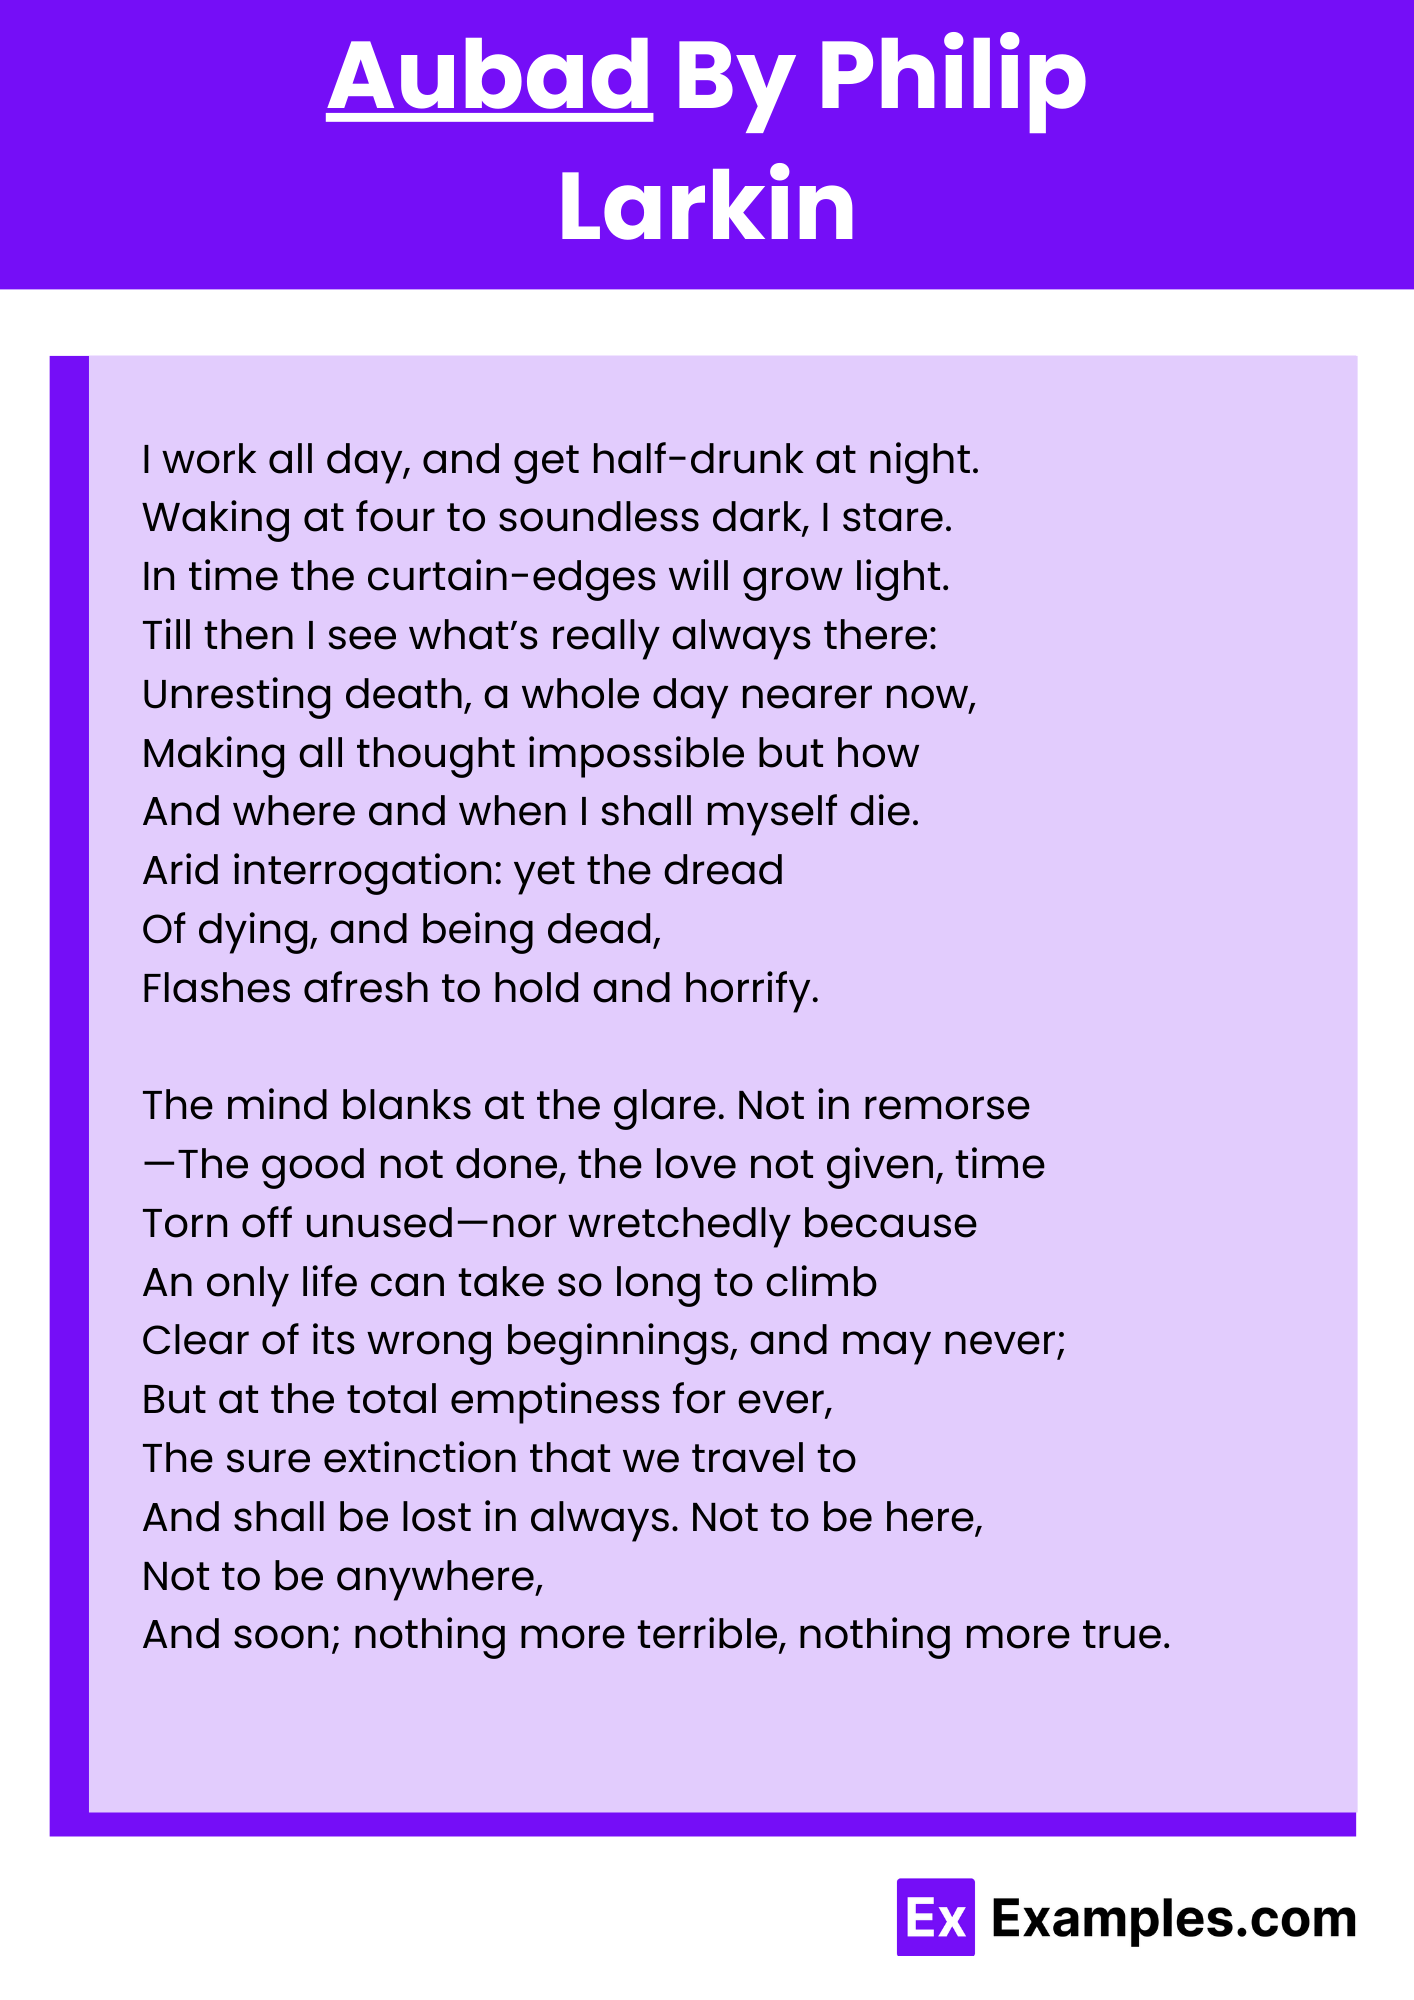 Aubade Poem by Philip Larkin, Download Pdf